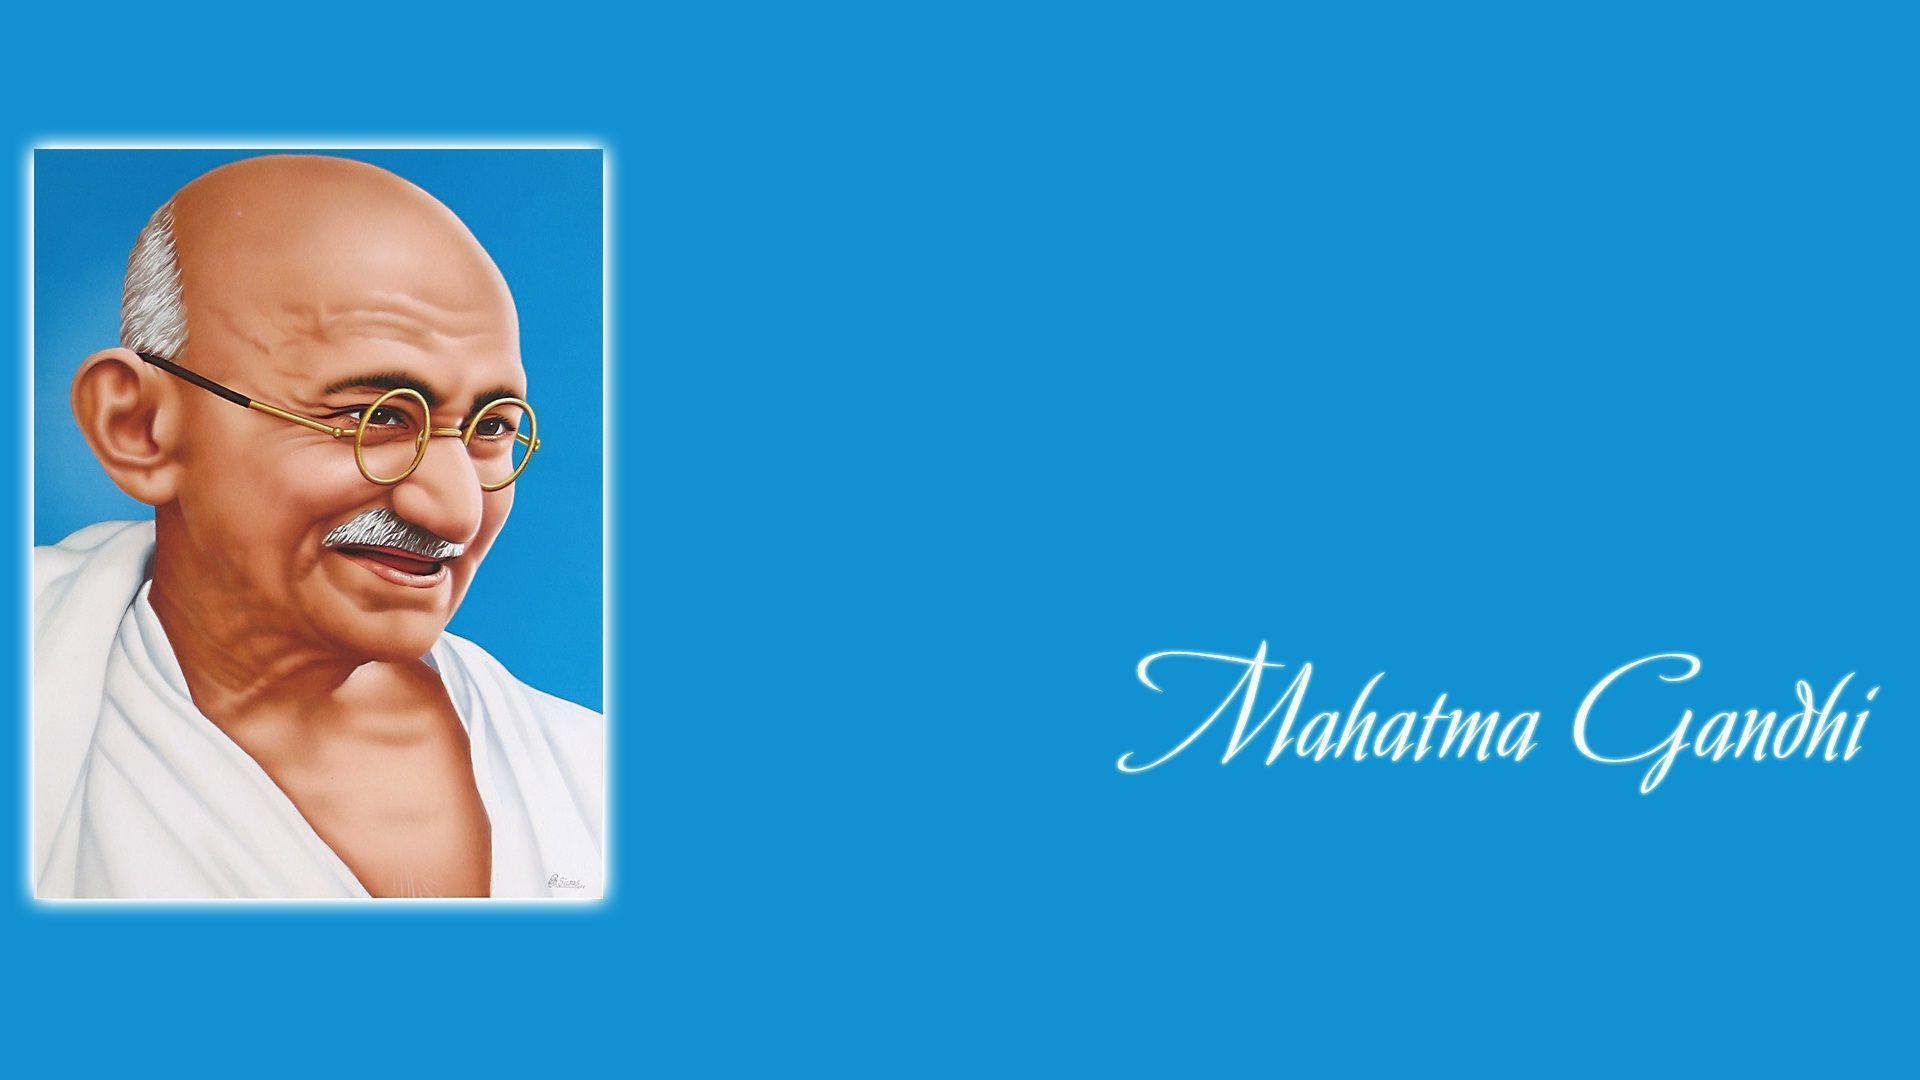 10 inspirational quotes by Mahatma Gandhi